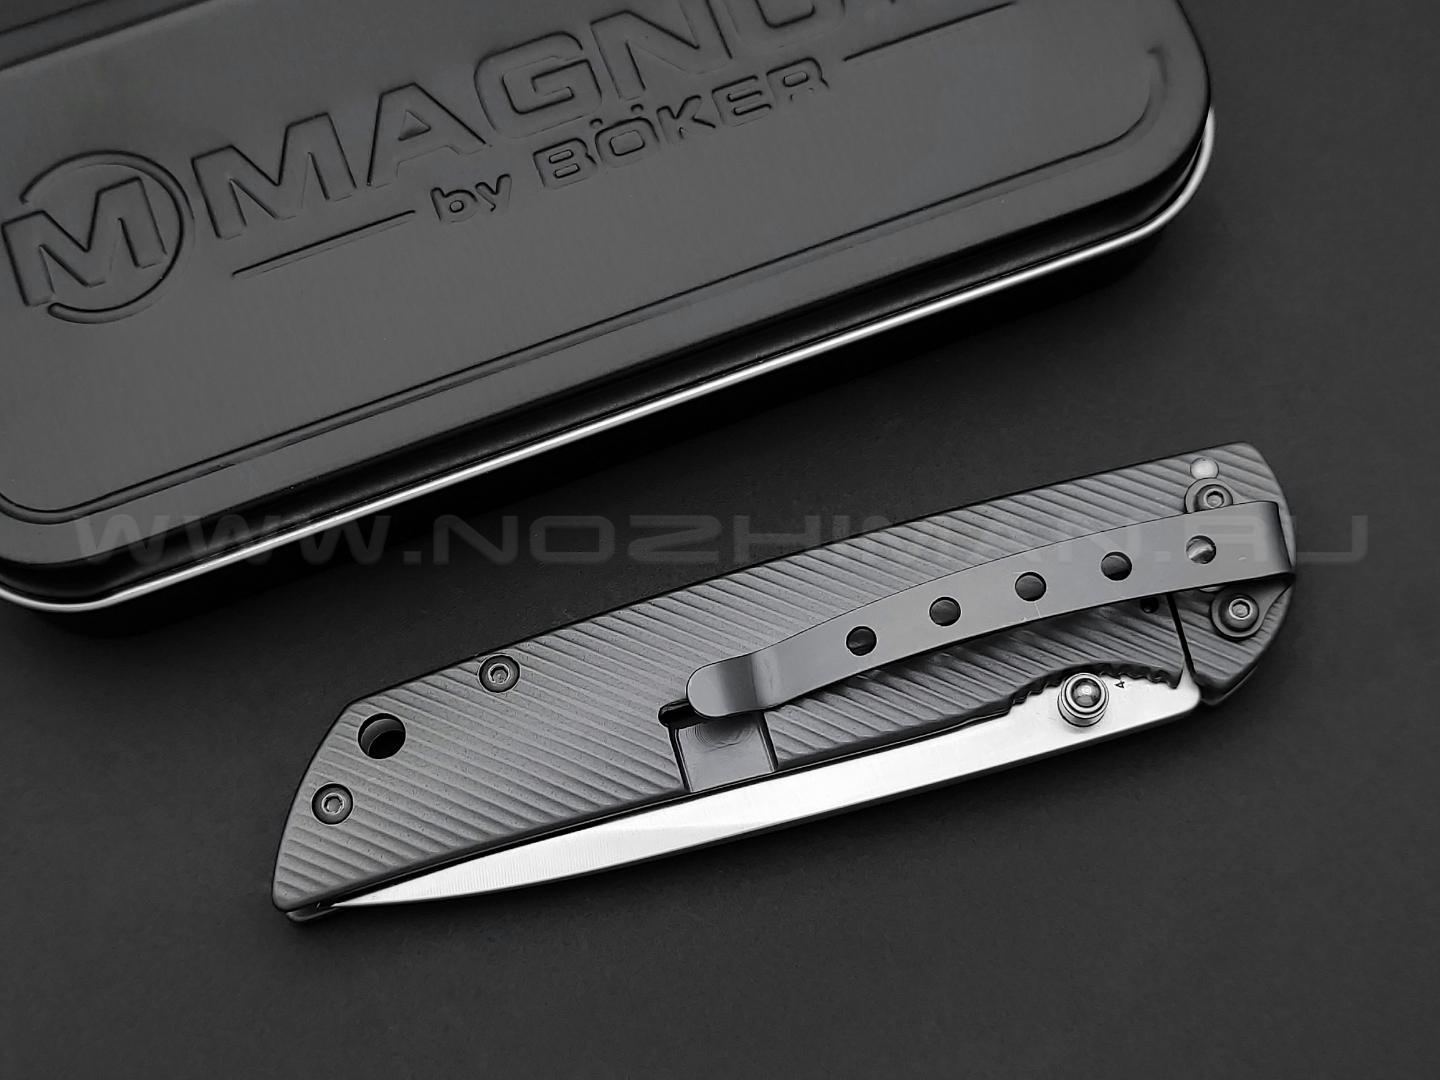 Нож Magnum Eternal Classic Thumb 01RY324 сталь 440A, рукоять Stainless Steel